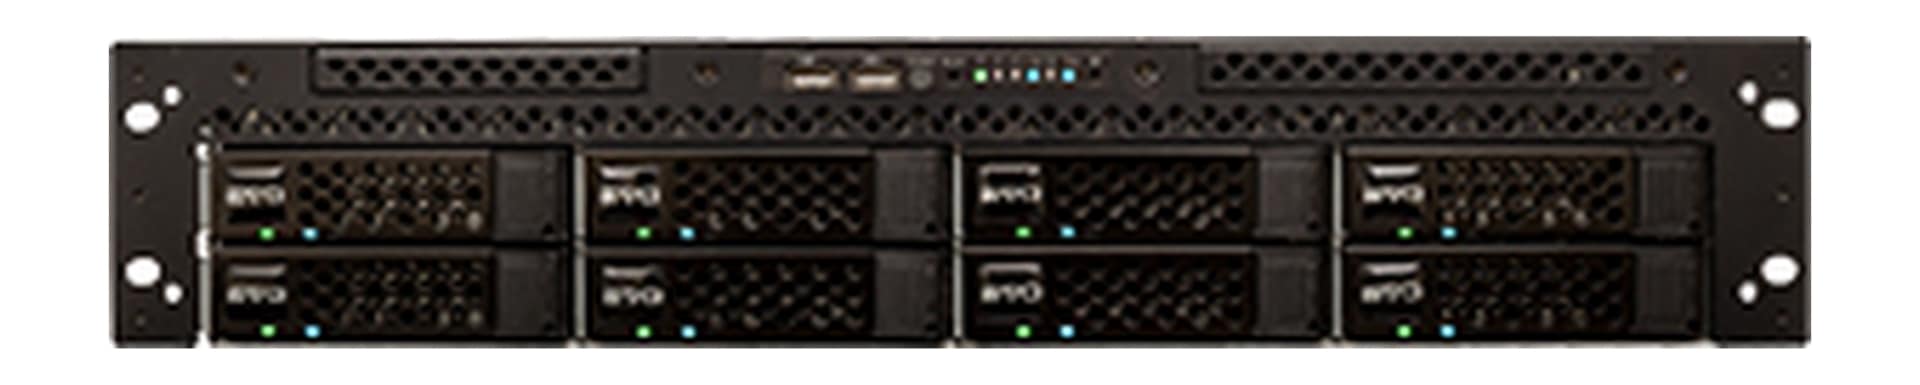 SNS EVO 2U 8 Bay Shared Storage Server with 15.2TB Raw Capacity Solid State